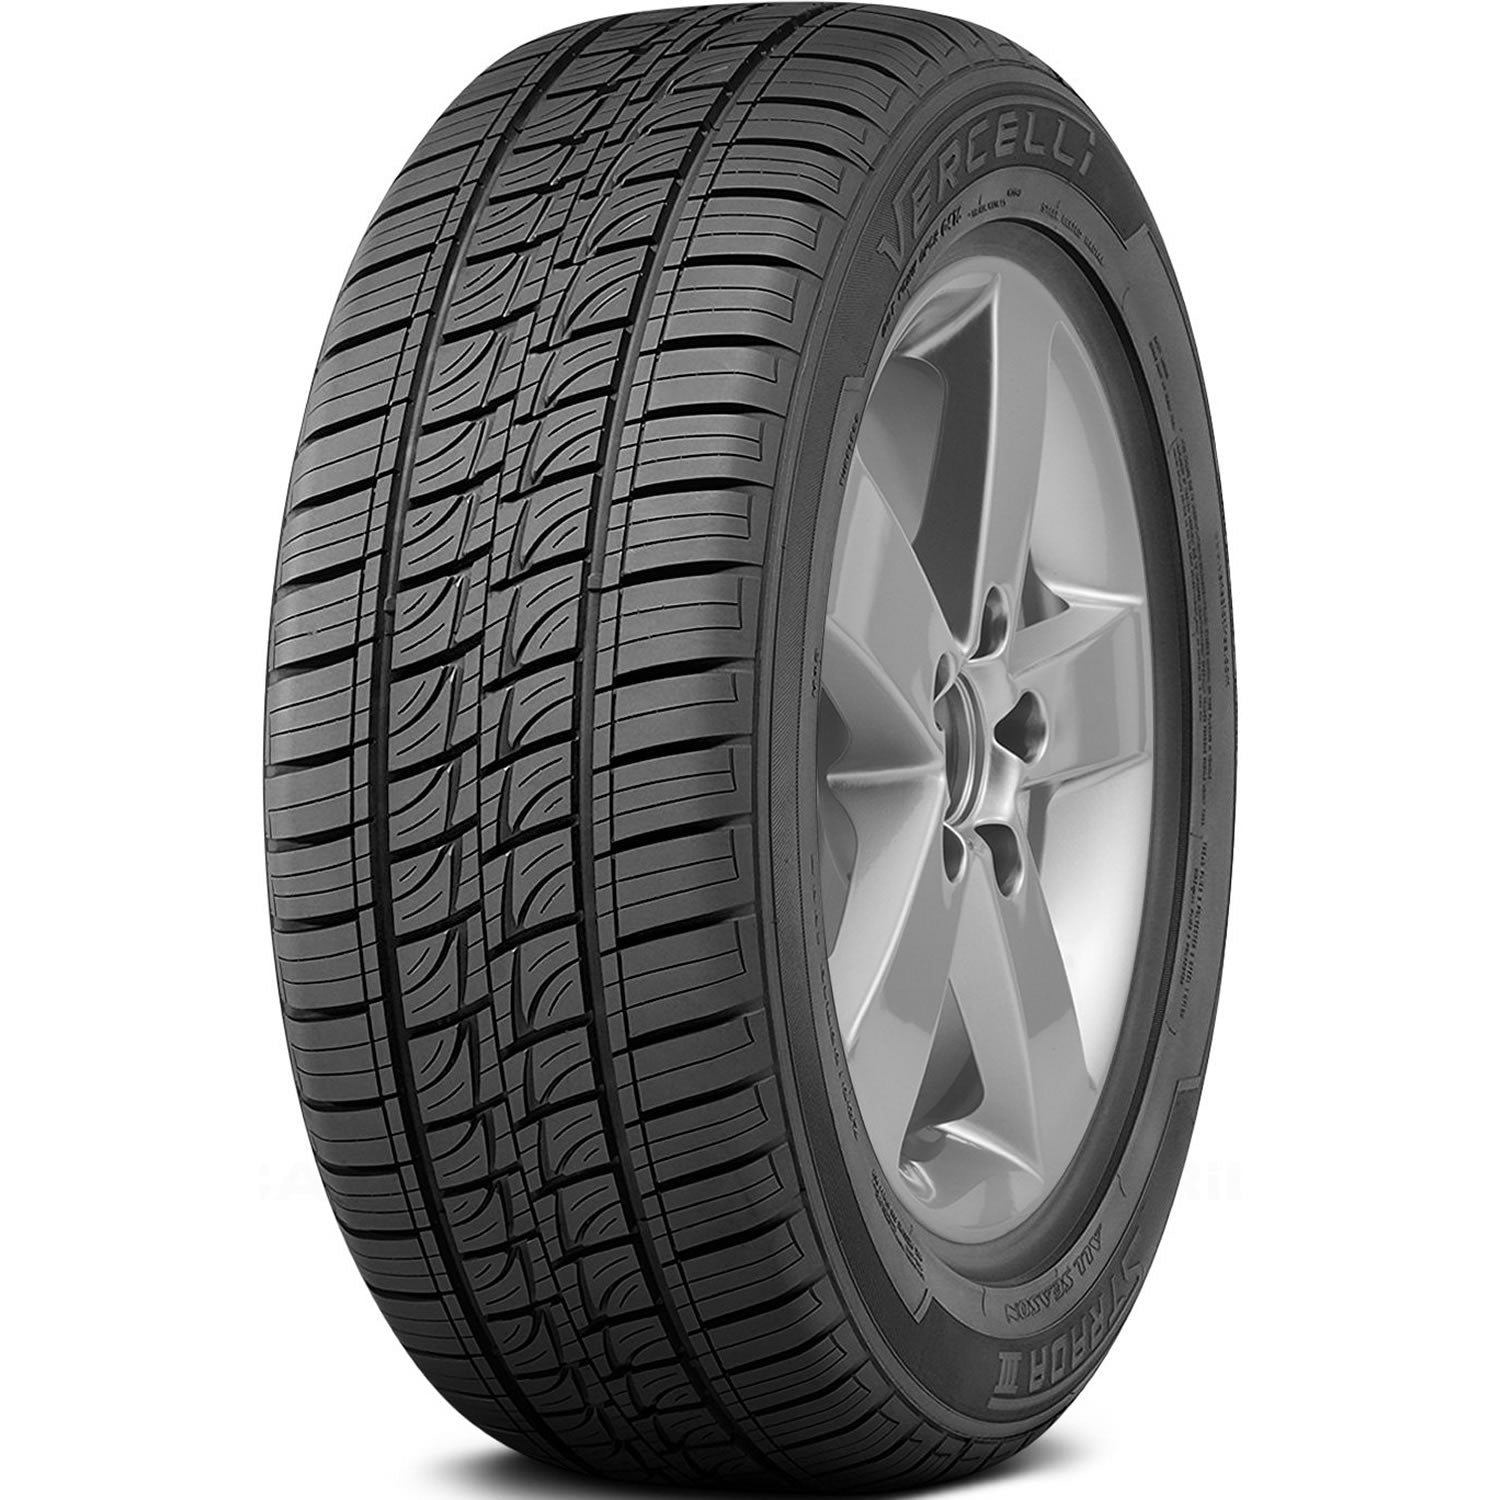 VERCELLI STRADA III 225/55R18 (27.8X9.2R 18) Tires